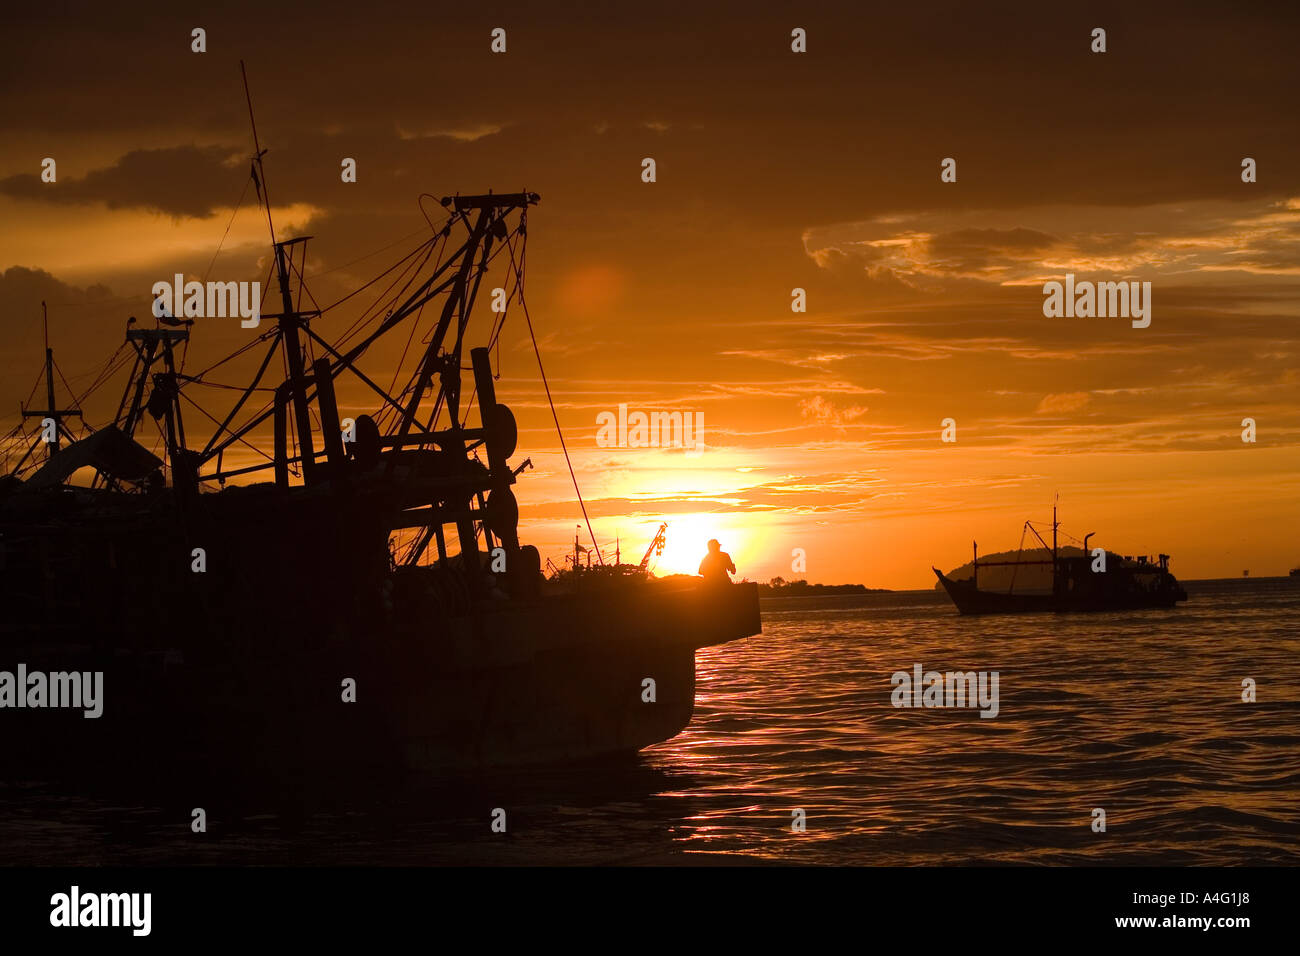 Malaysia Borneo Sabah Kota Kinabalu South China seafront fishing boats sunset Stock Photo